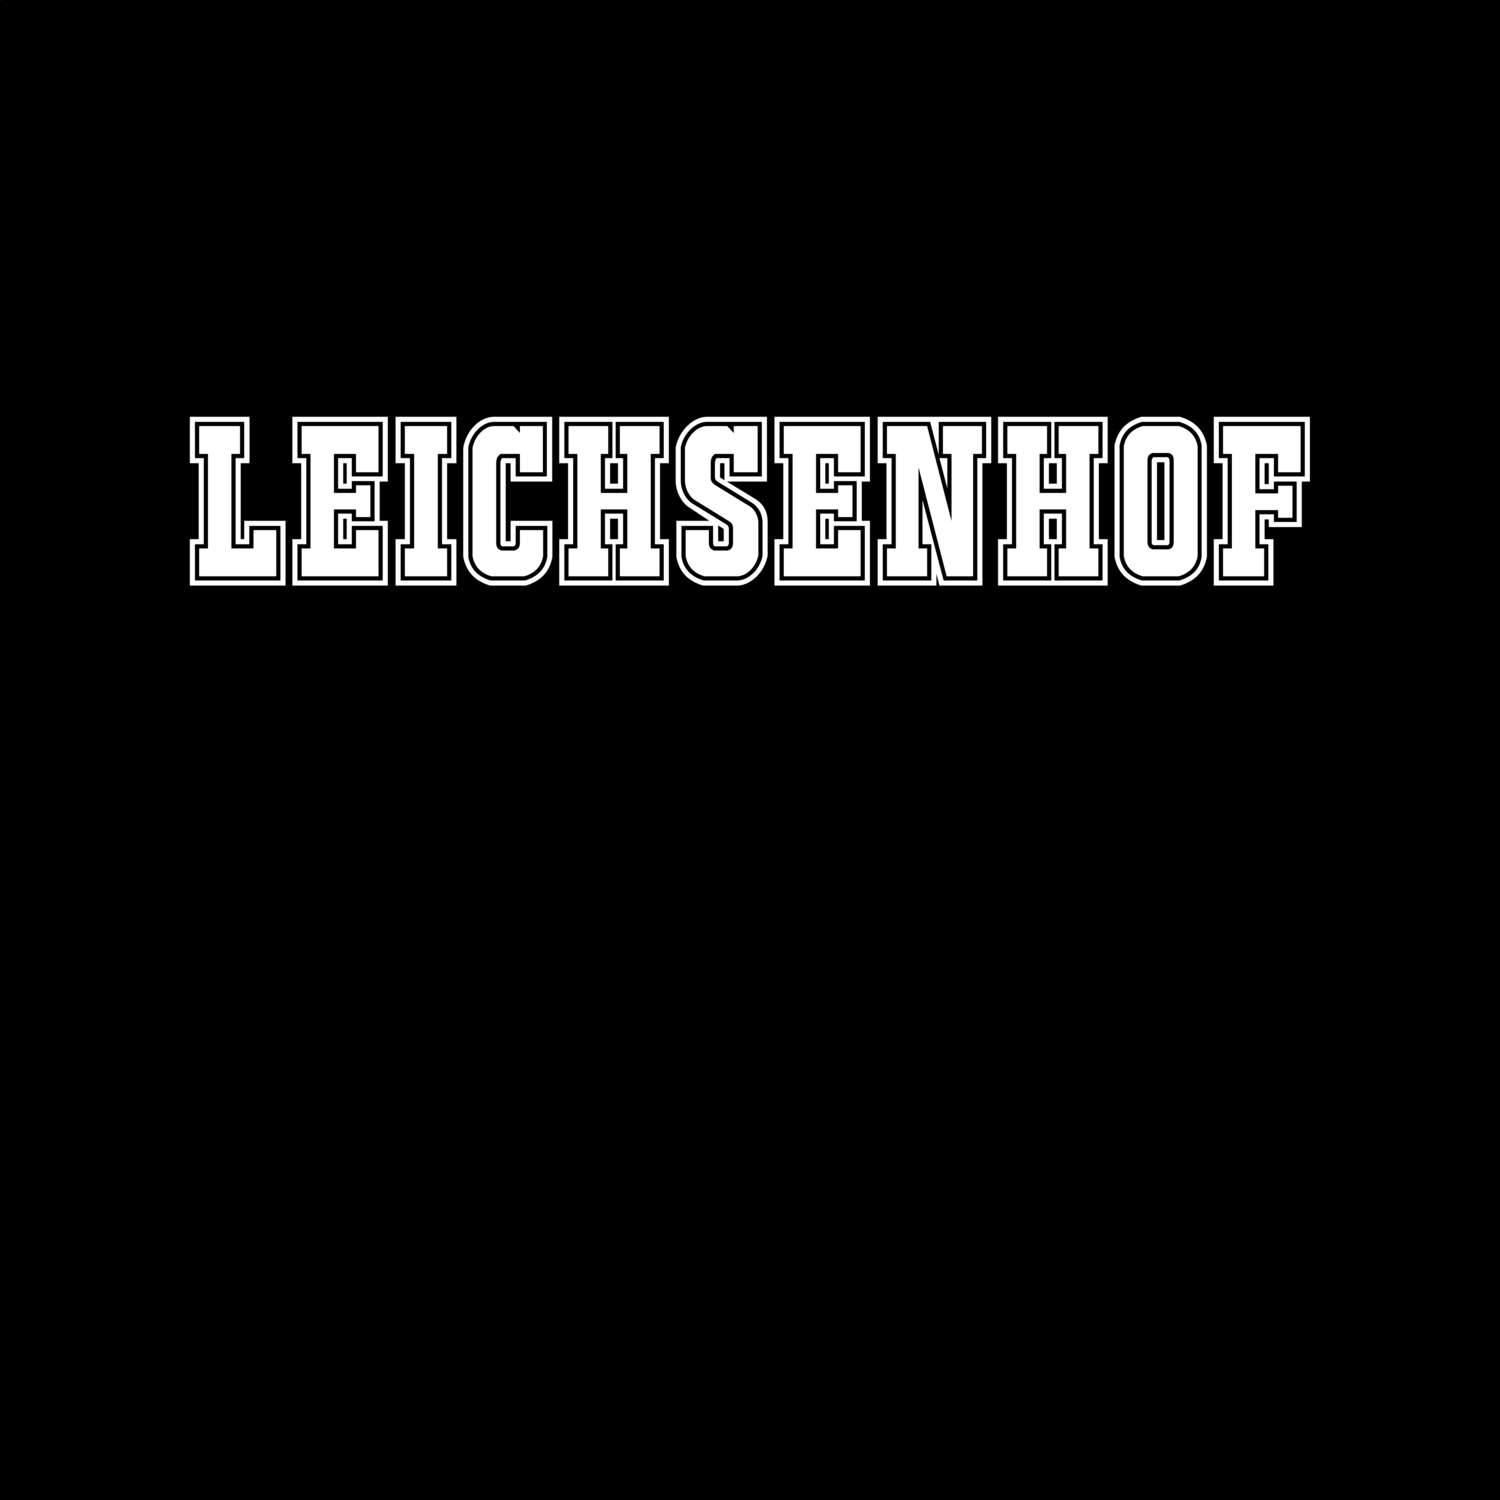 Leichsenhof T-Shirt »Classic«